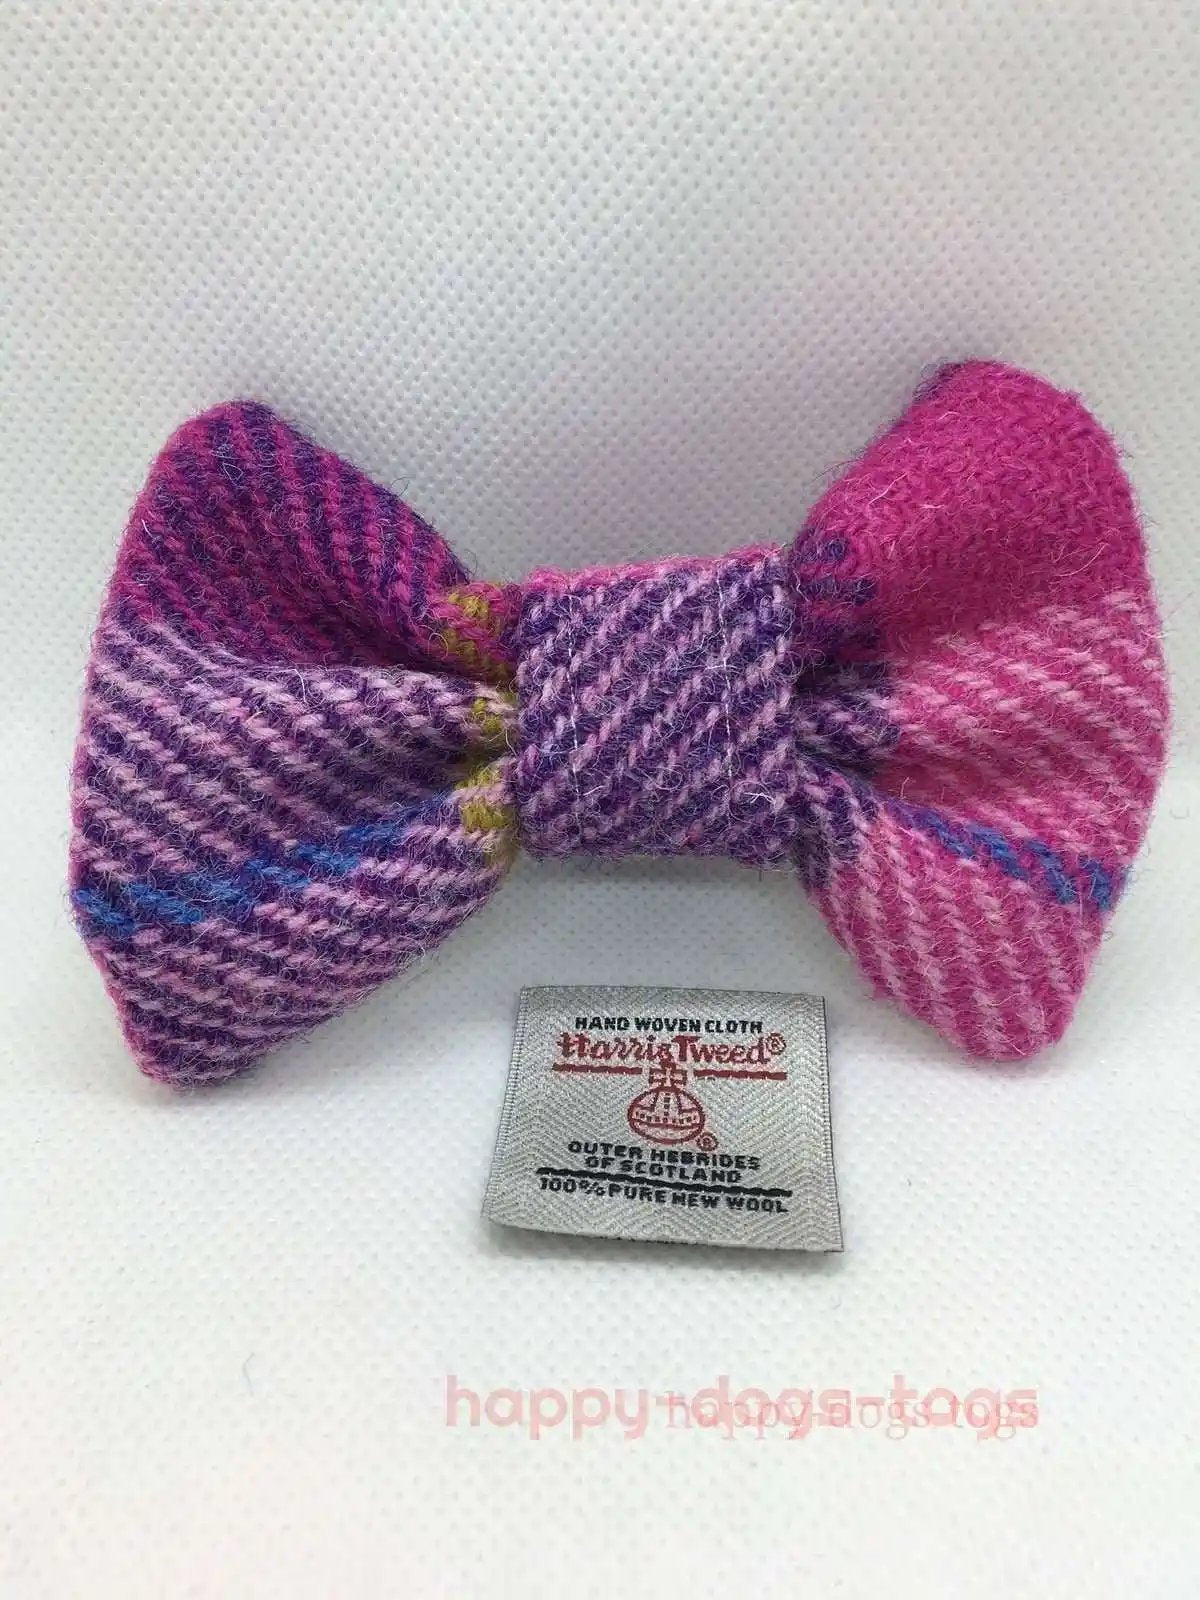 Harris tweed dog bow tie Pink, Lilac, Blue